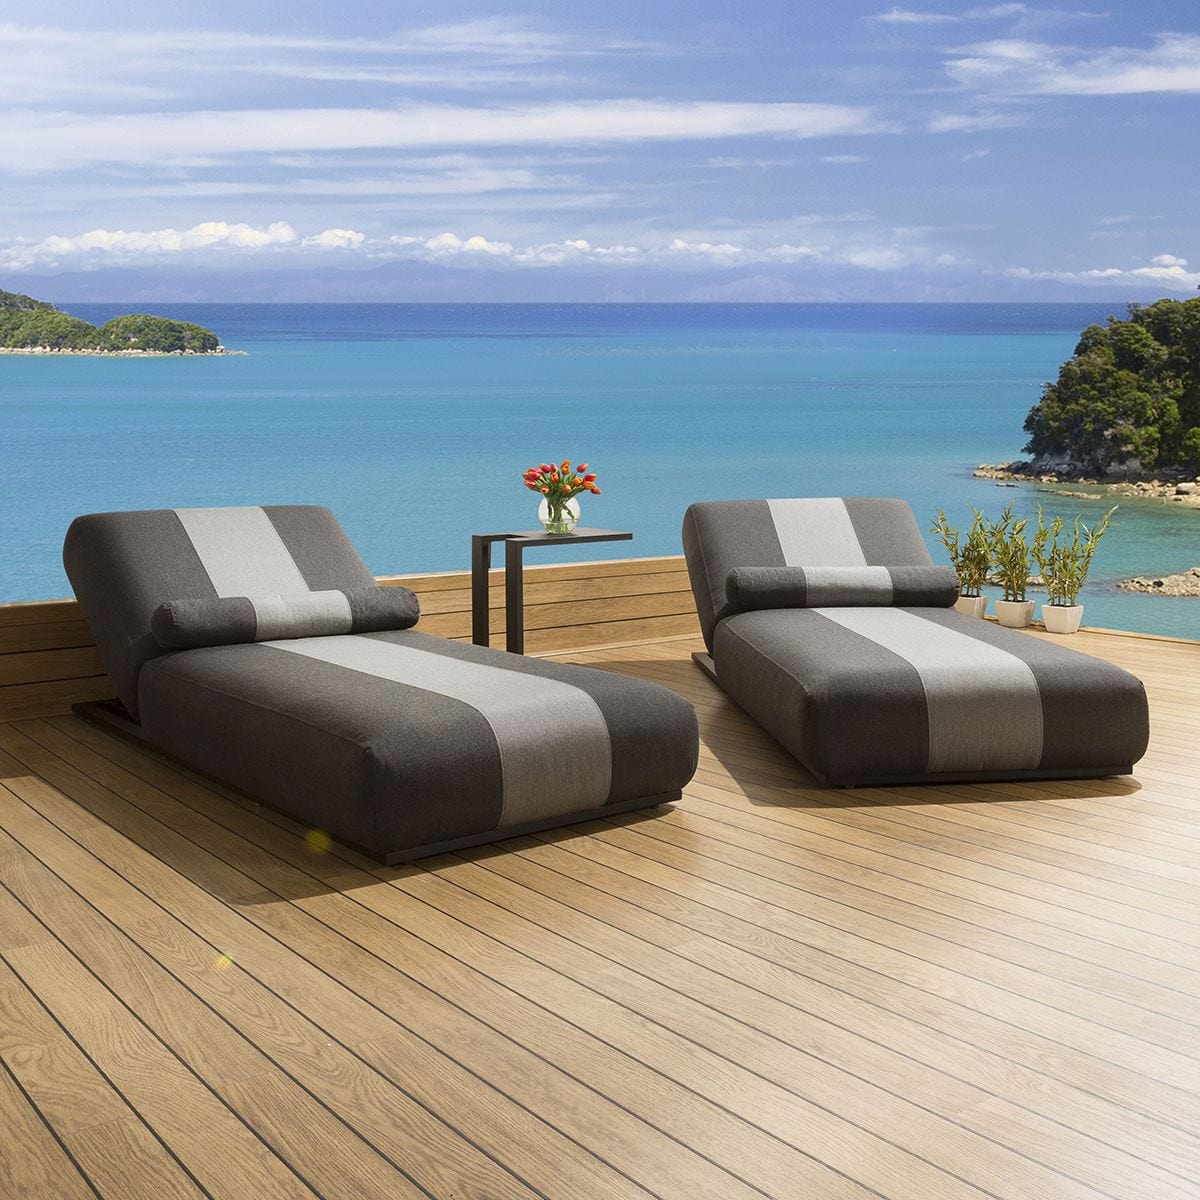 Quatropi Quatropi Premium Garden Fabric Lounger / Sunbed / Day Bed Black / Grey Cancun